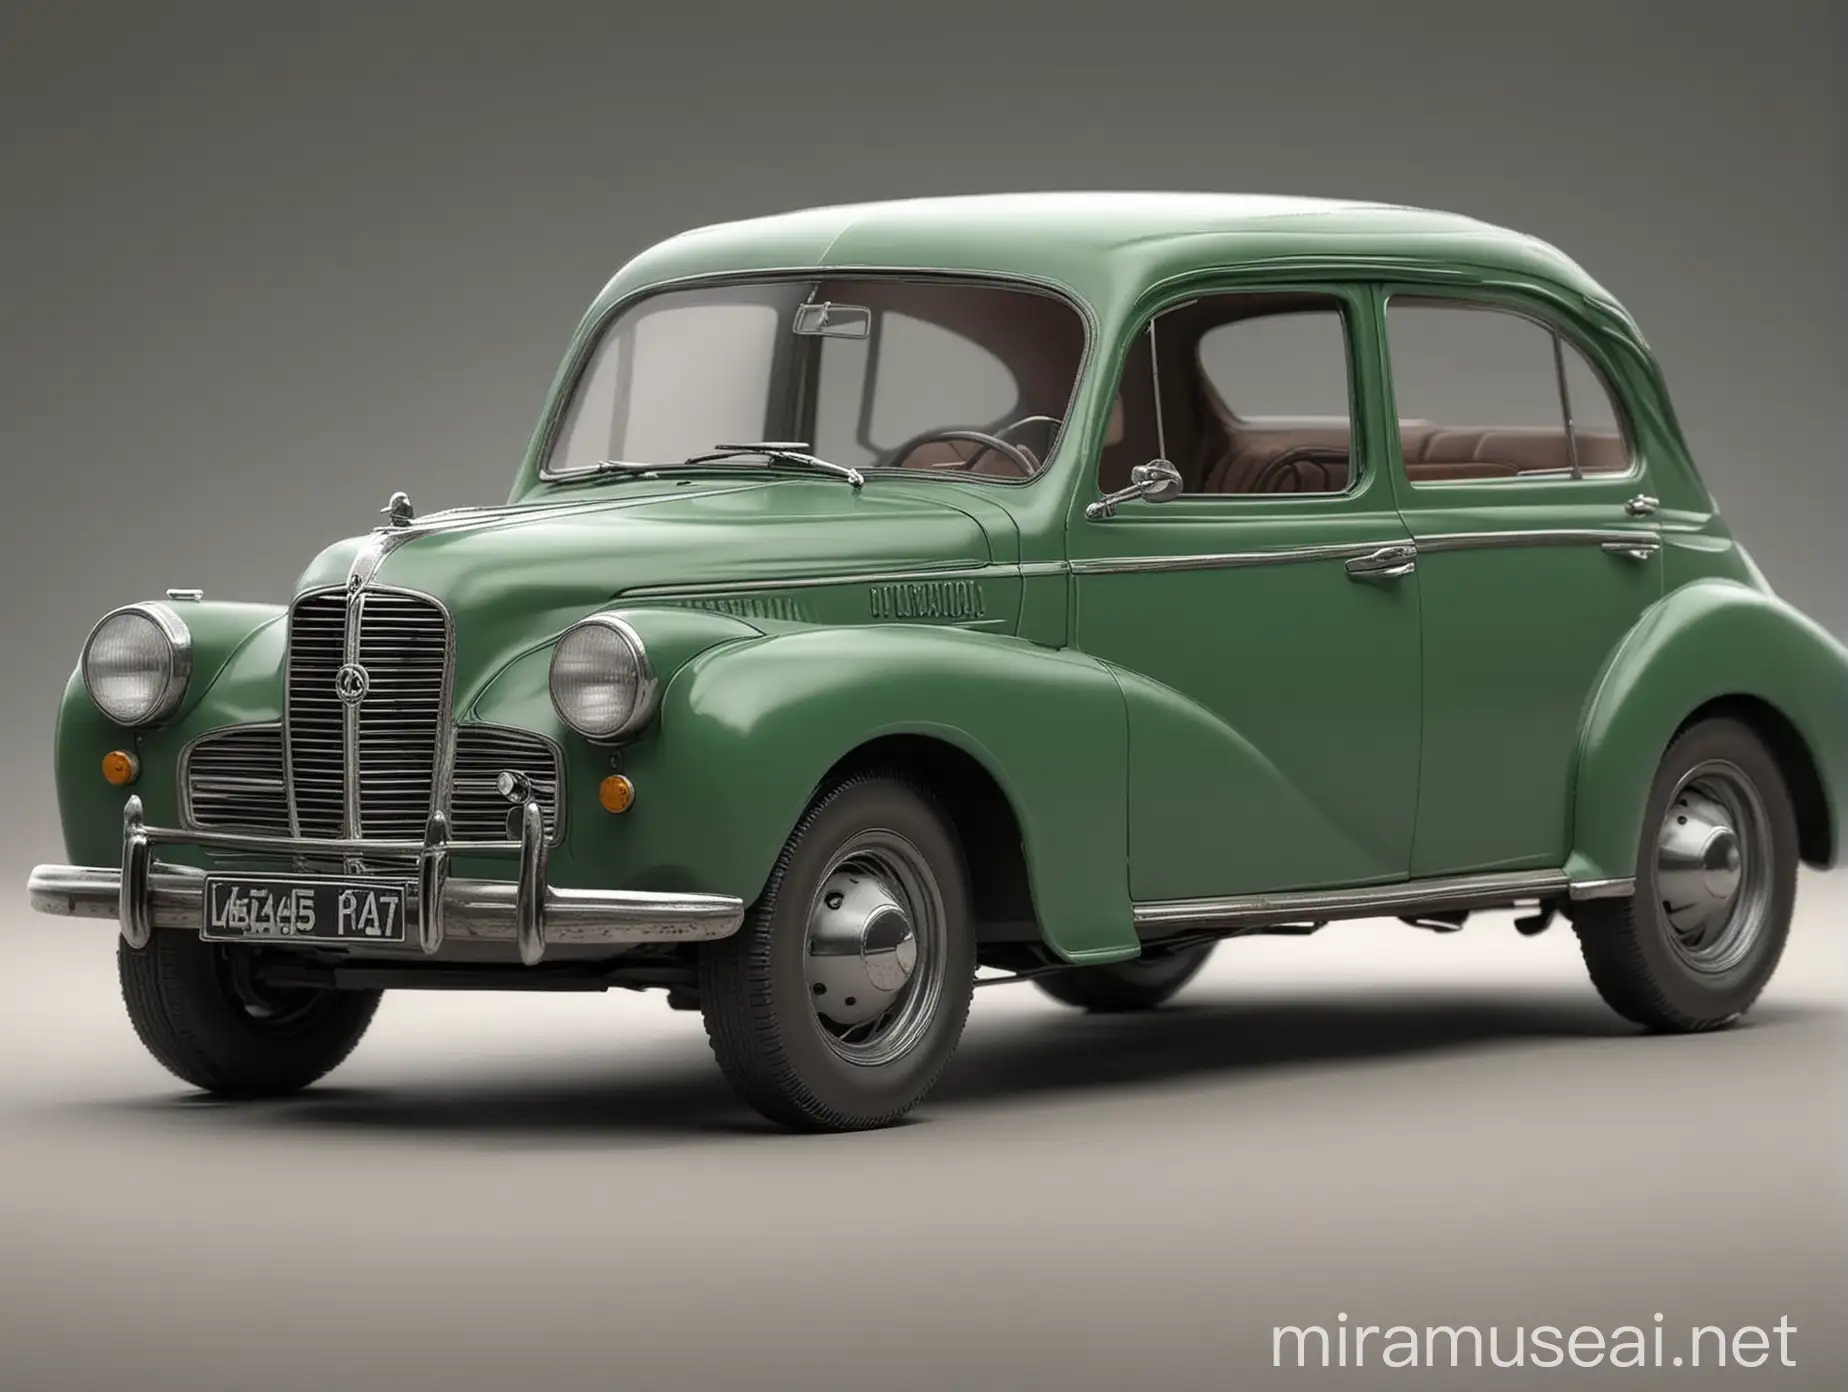 1940s Opel Kadett Classic Car in Vivid Realistic Color 8K Image